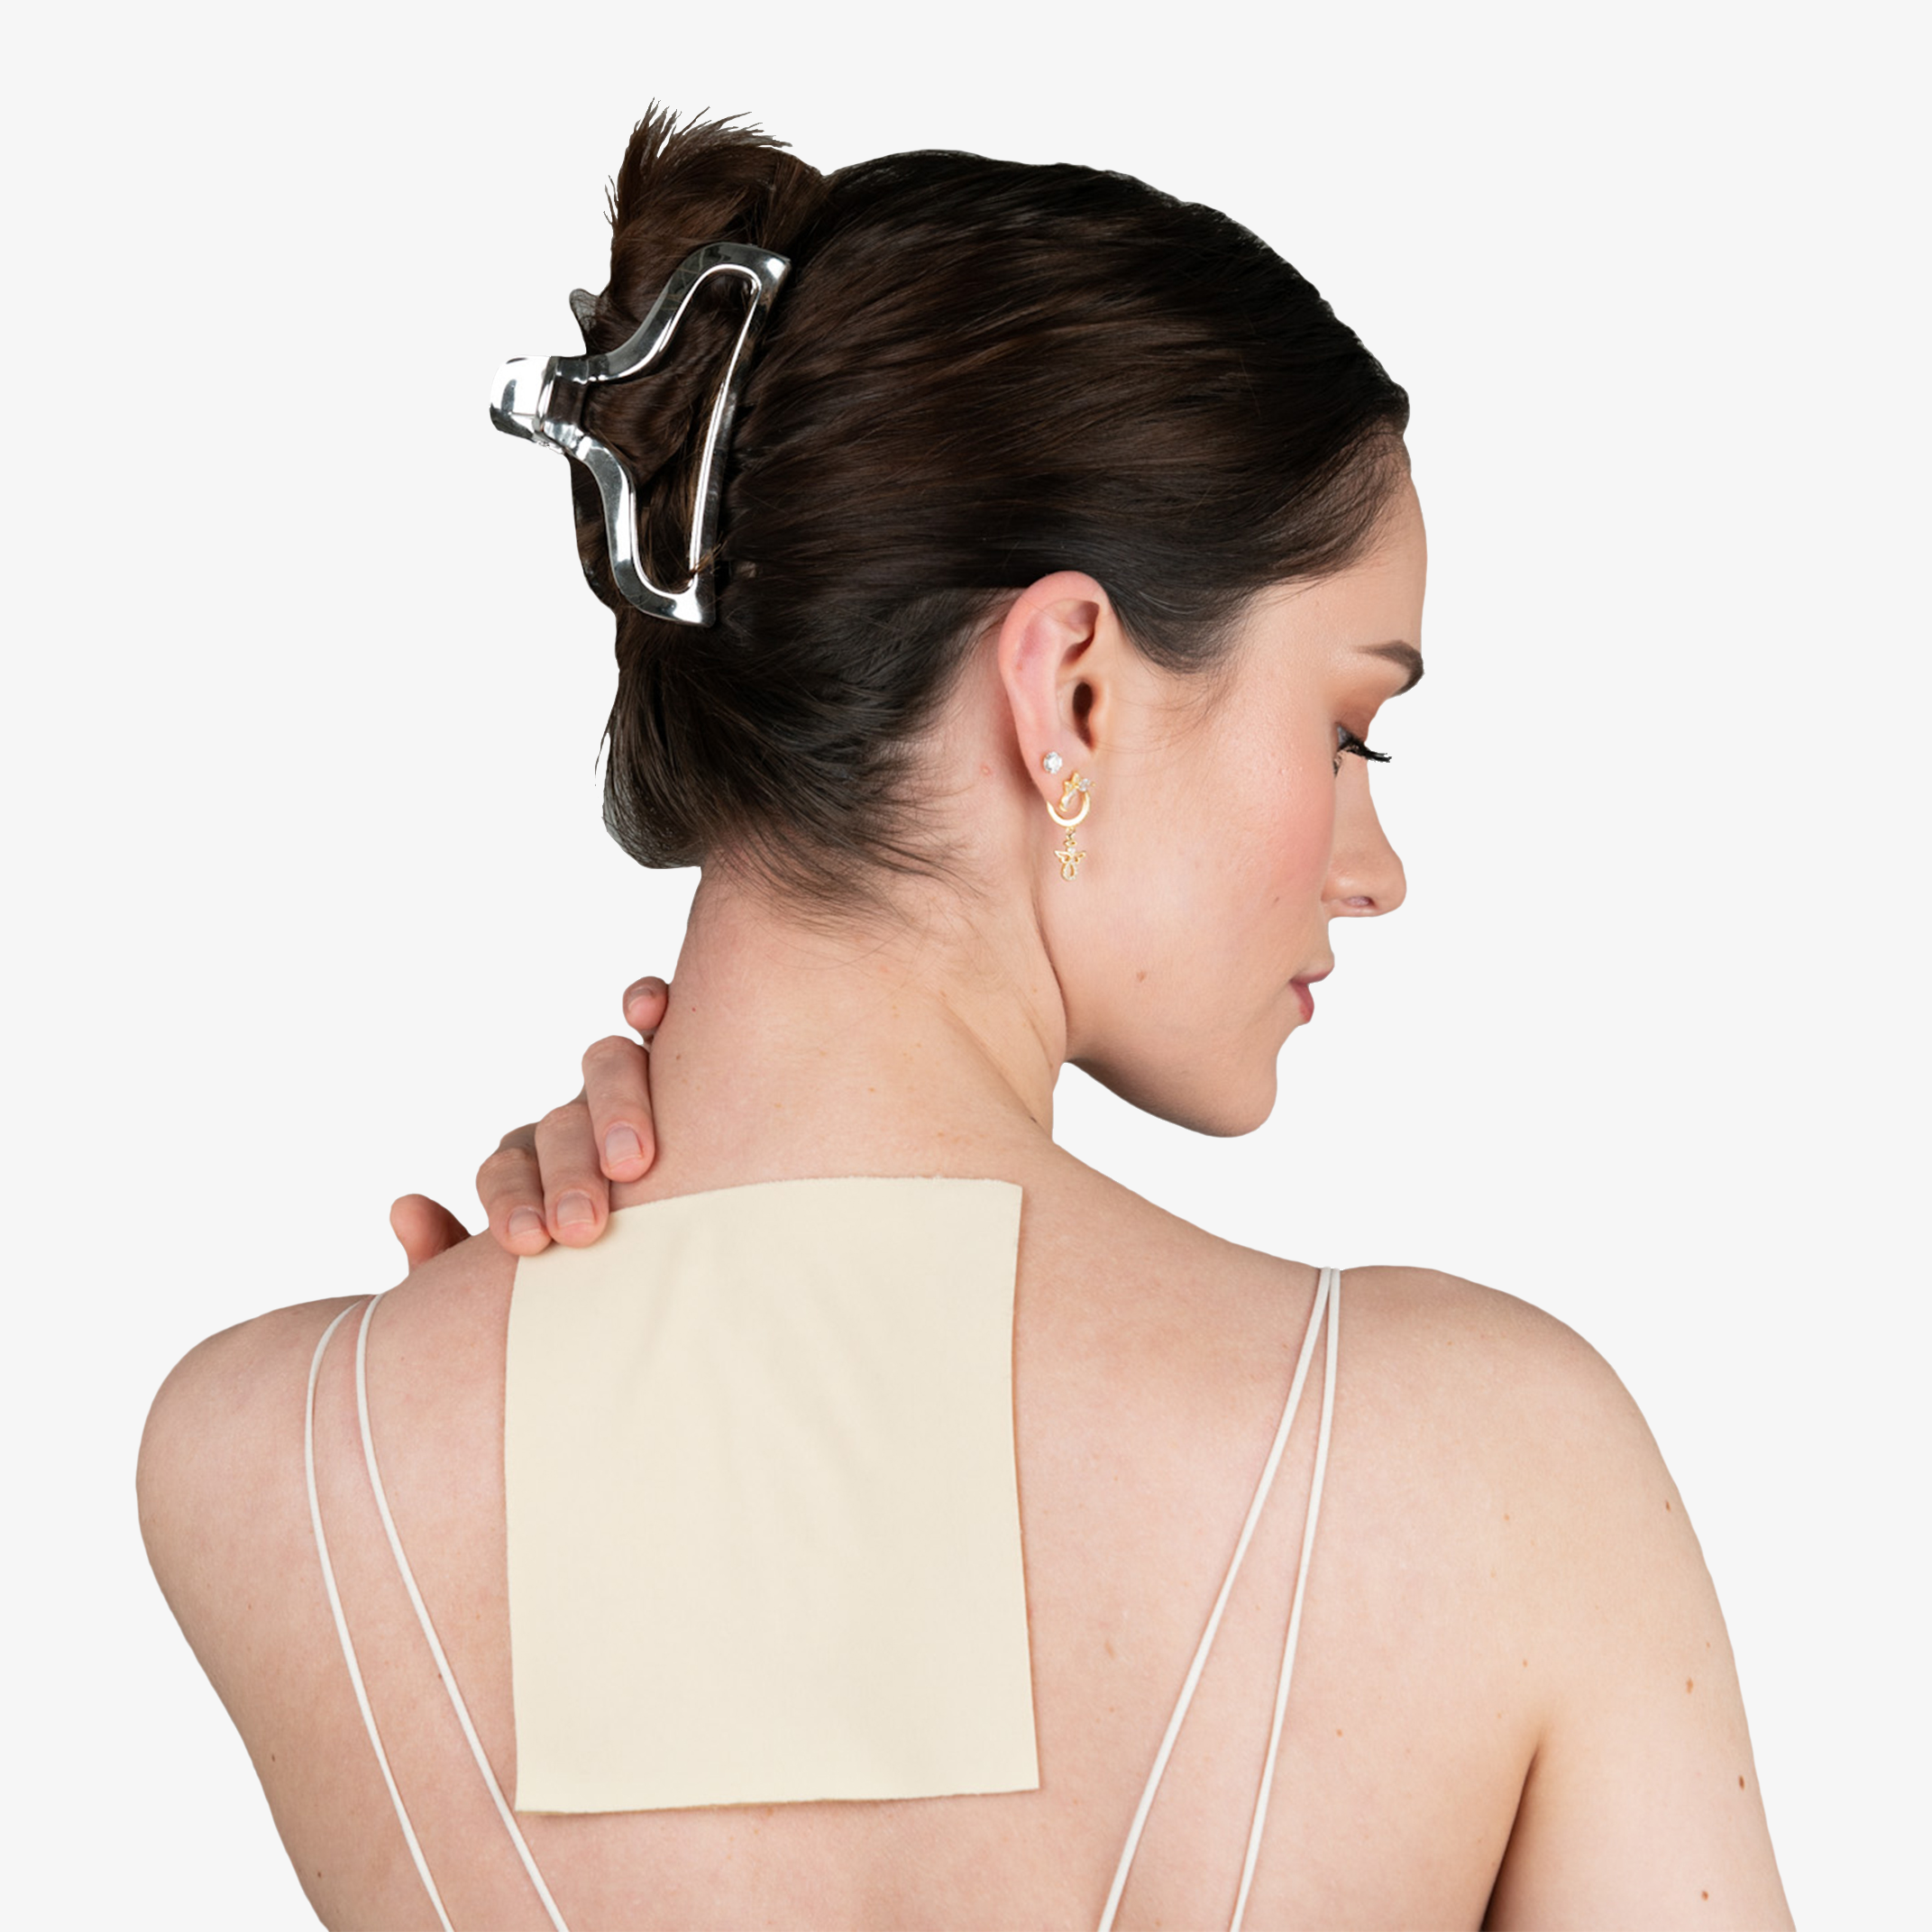 Advanced Medical-Grade Silicone Sheet 5" x 6" on caucasian women's back| beige